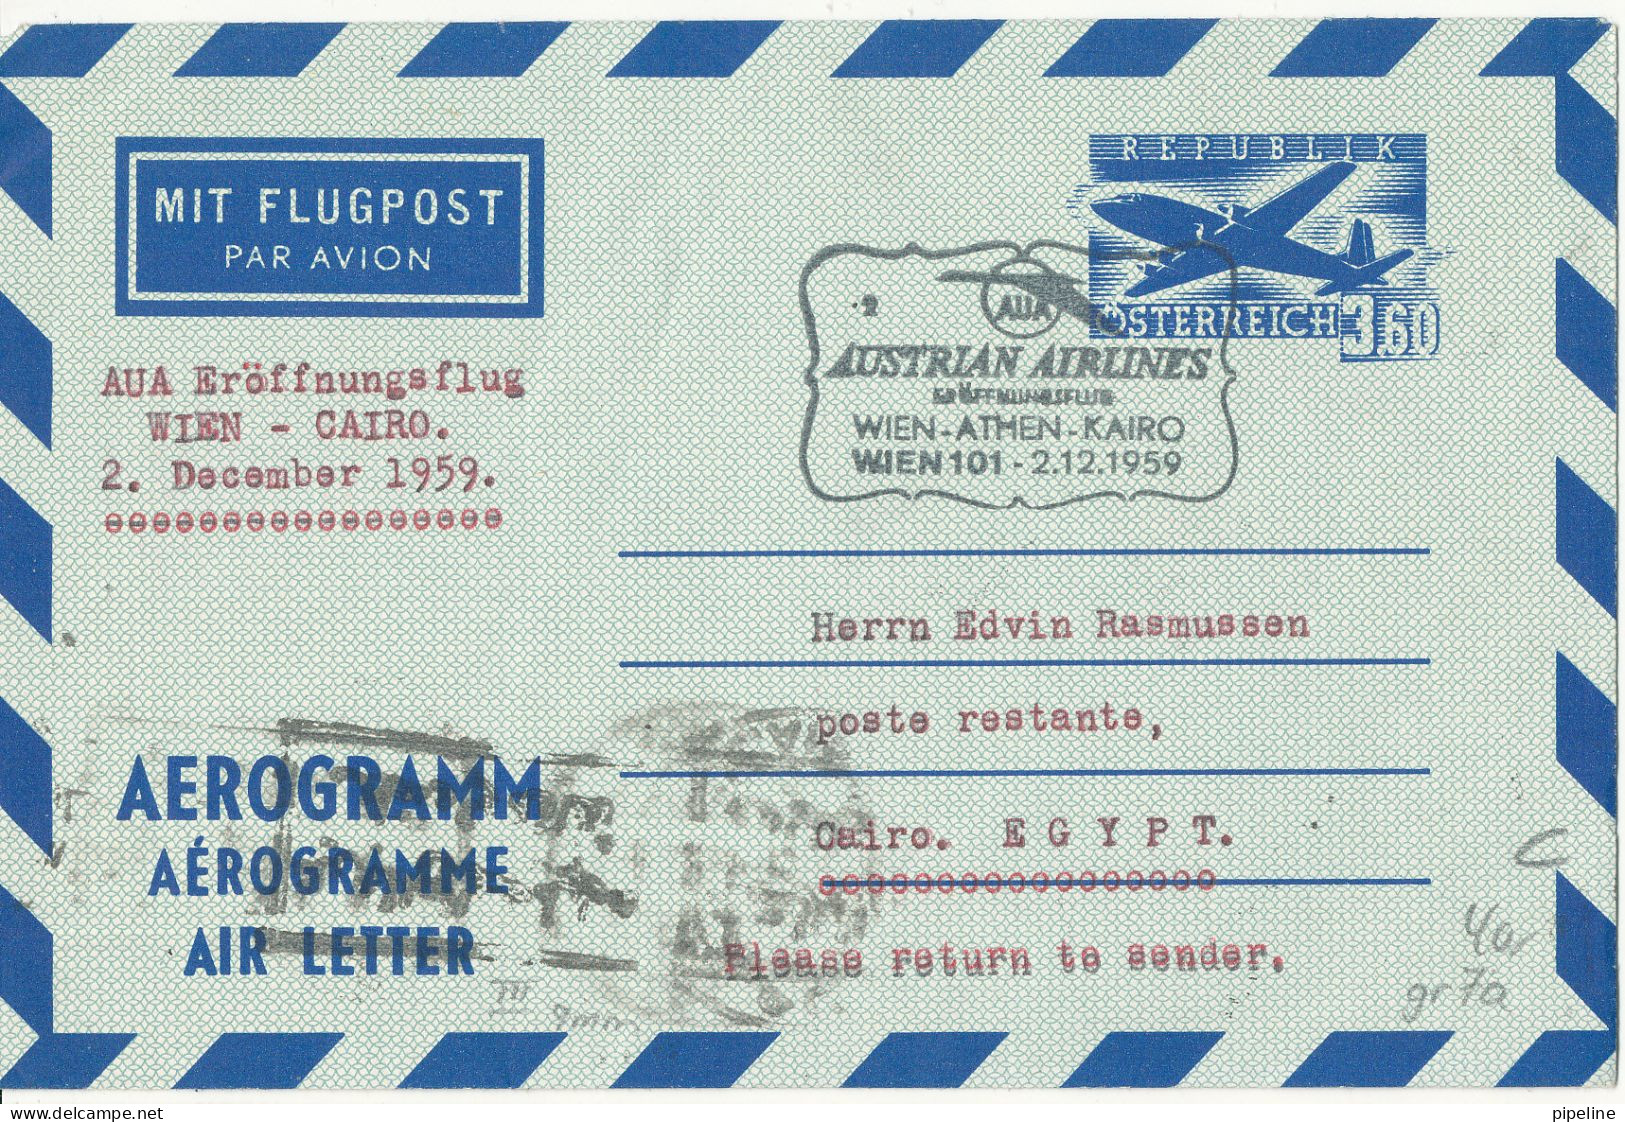 Austria Aerogramme First Flight Austrian Airlines Wien - Athen - Cairo -Wien 2-12-1959 - Eerste Vluchten